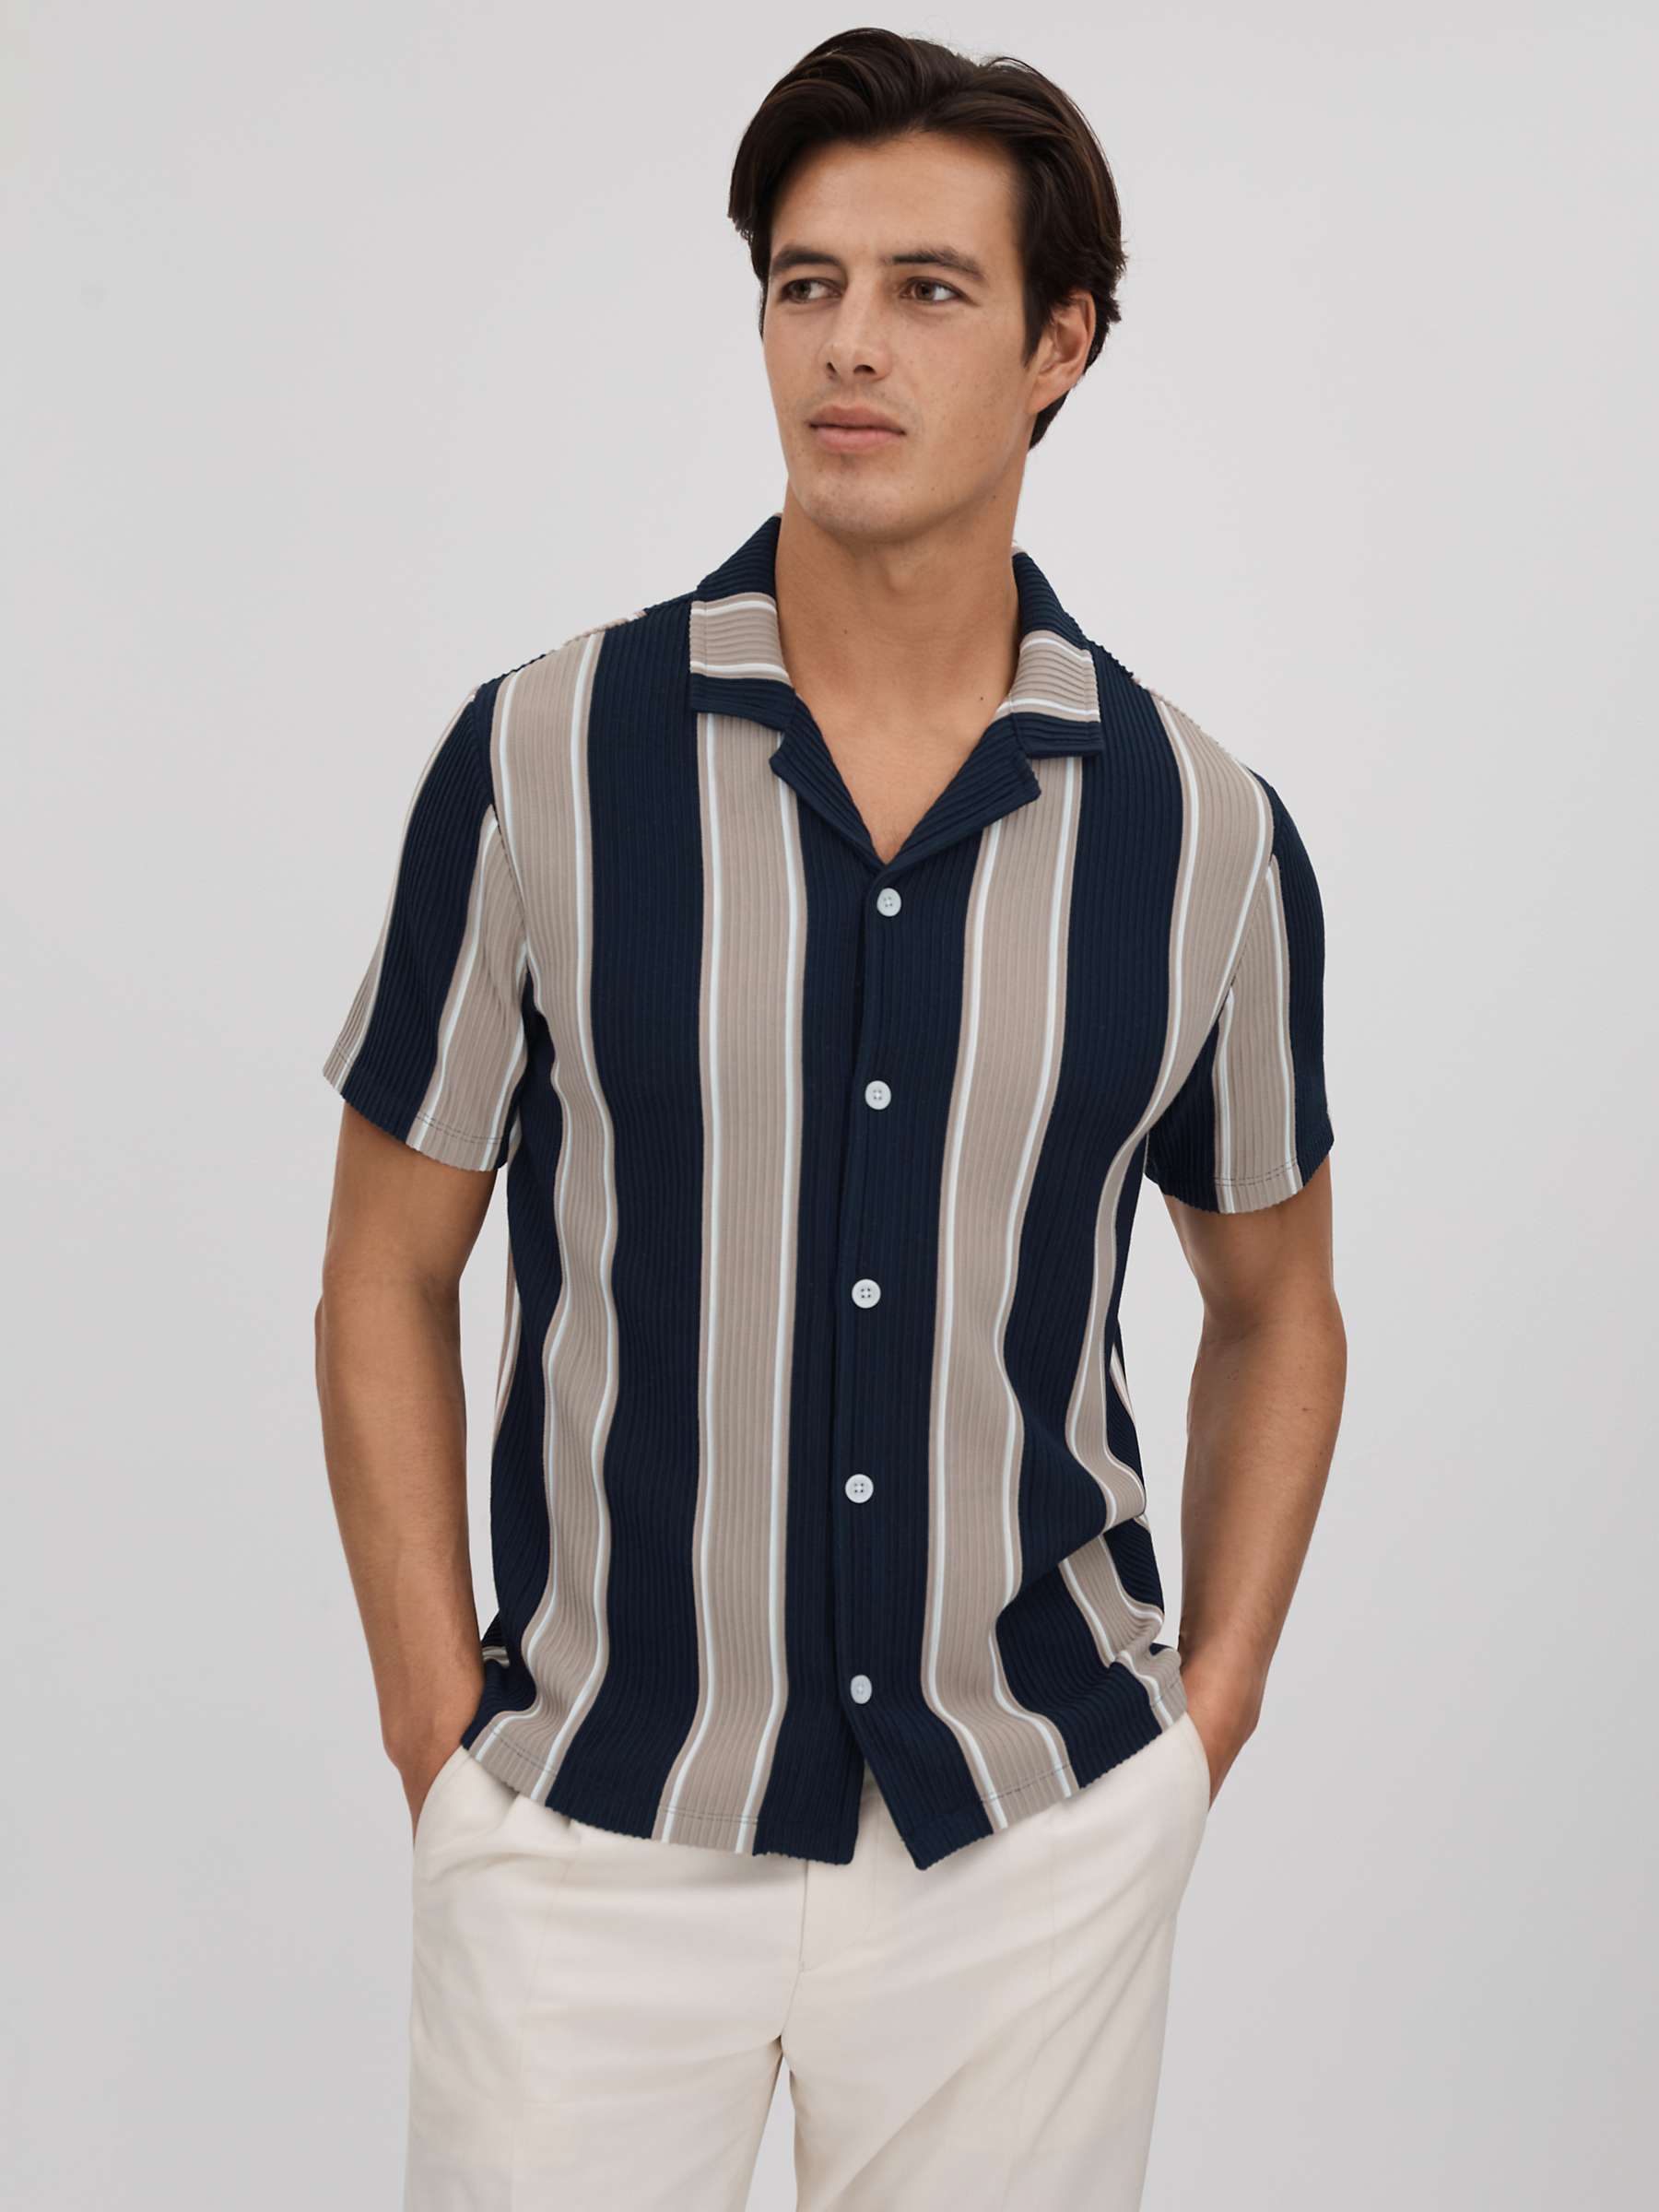 Buy Reiss Alton Short Sleeve Textured Stripe Shirt, Navy/Camel Online at johnlewis.com